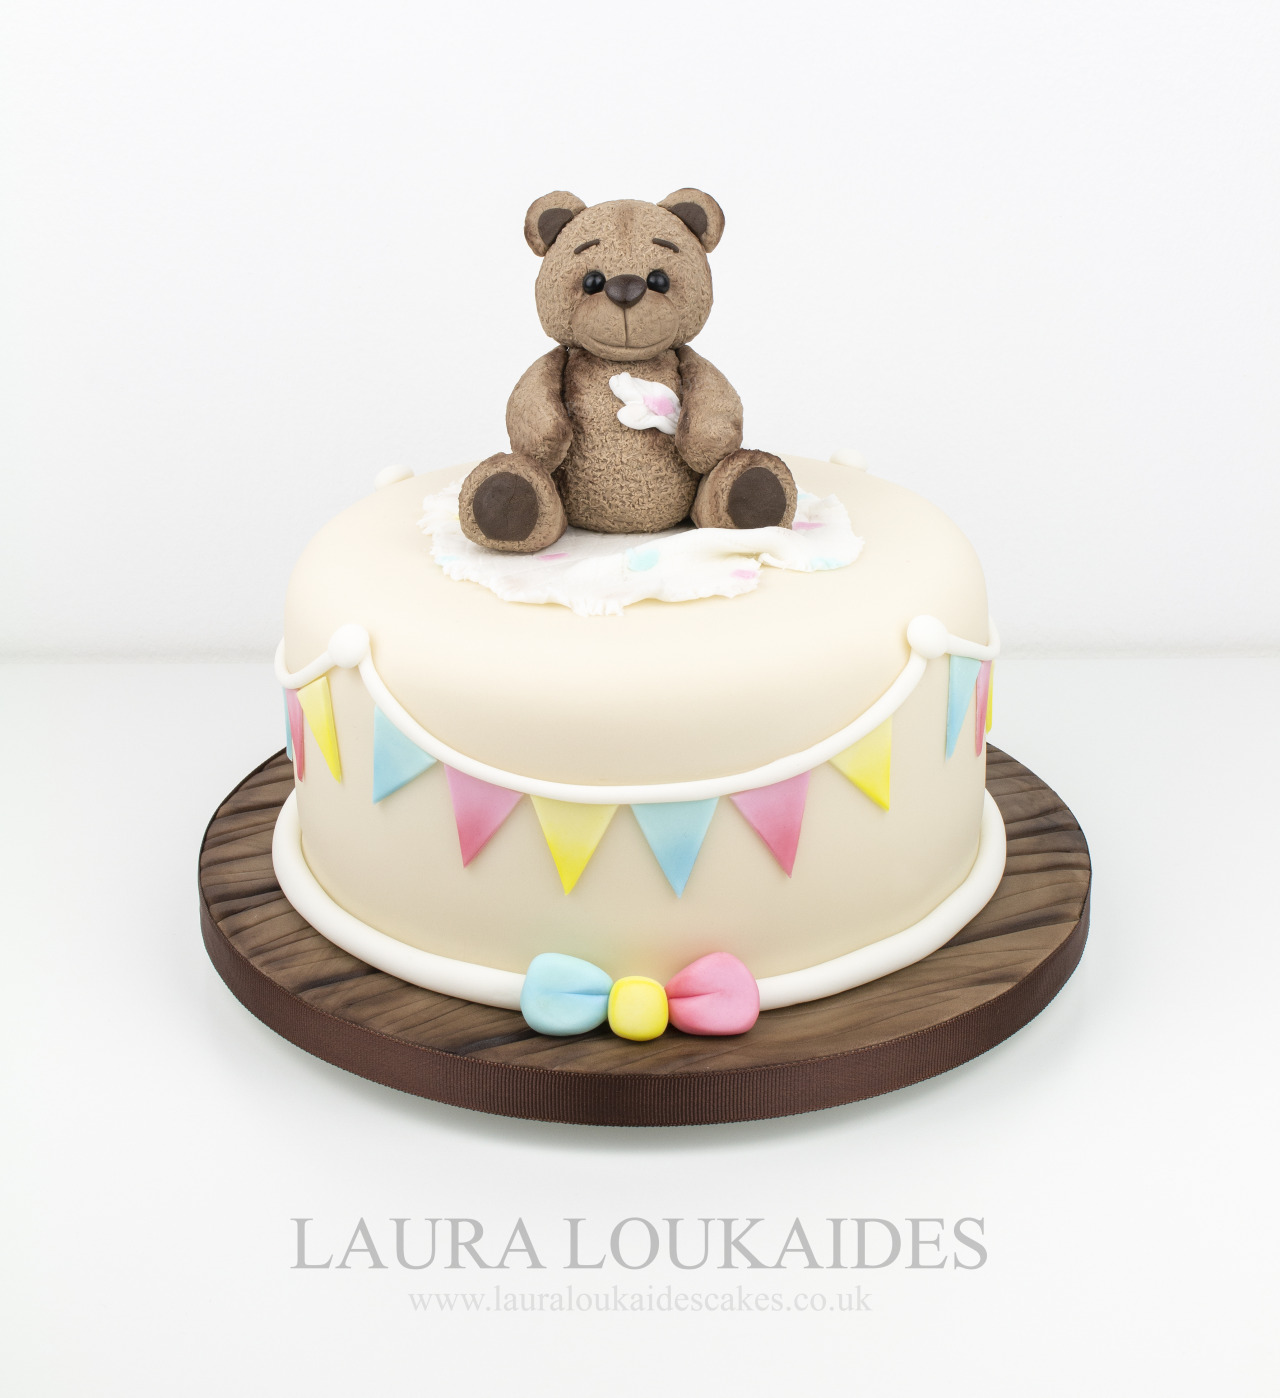 LAURA LOUKAIDES — “Little Pink Bag” cake by Laura Loukaides